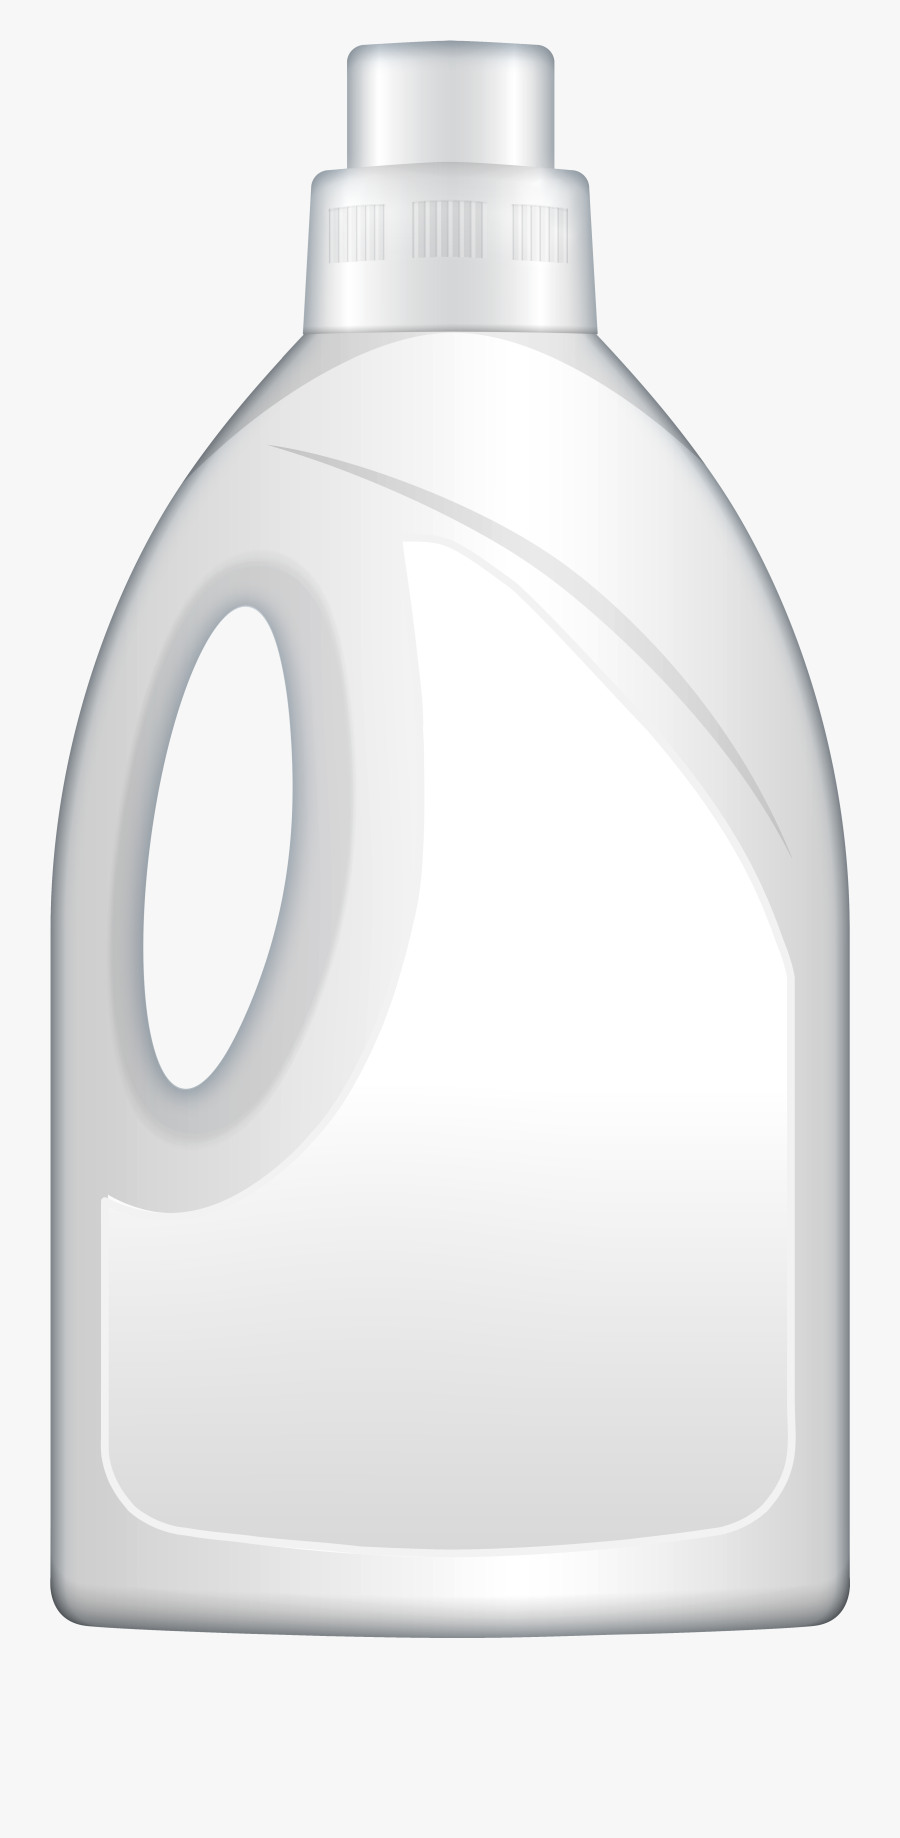 White Plastic Jerrycan Oil Png Clipart - Circle, Transparent Clipart